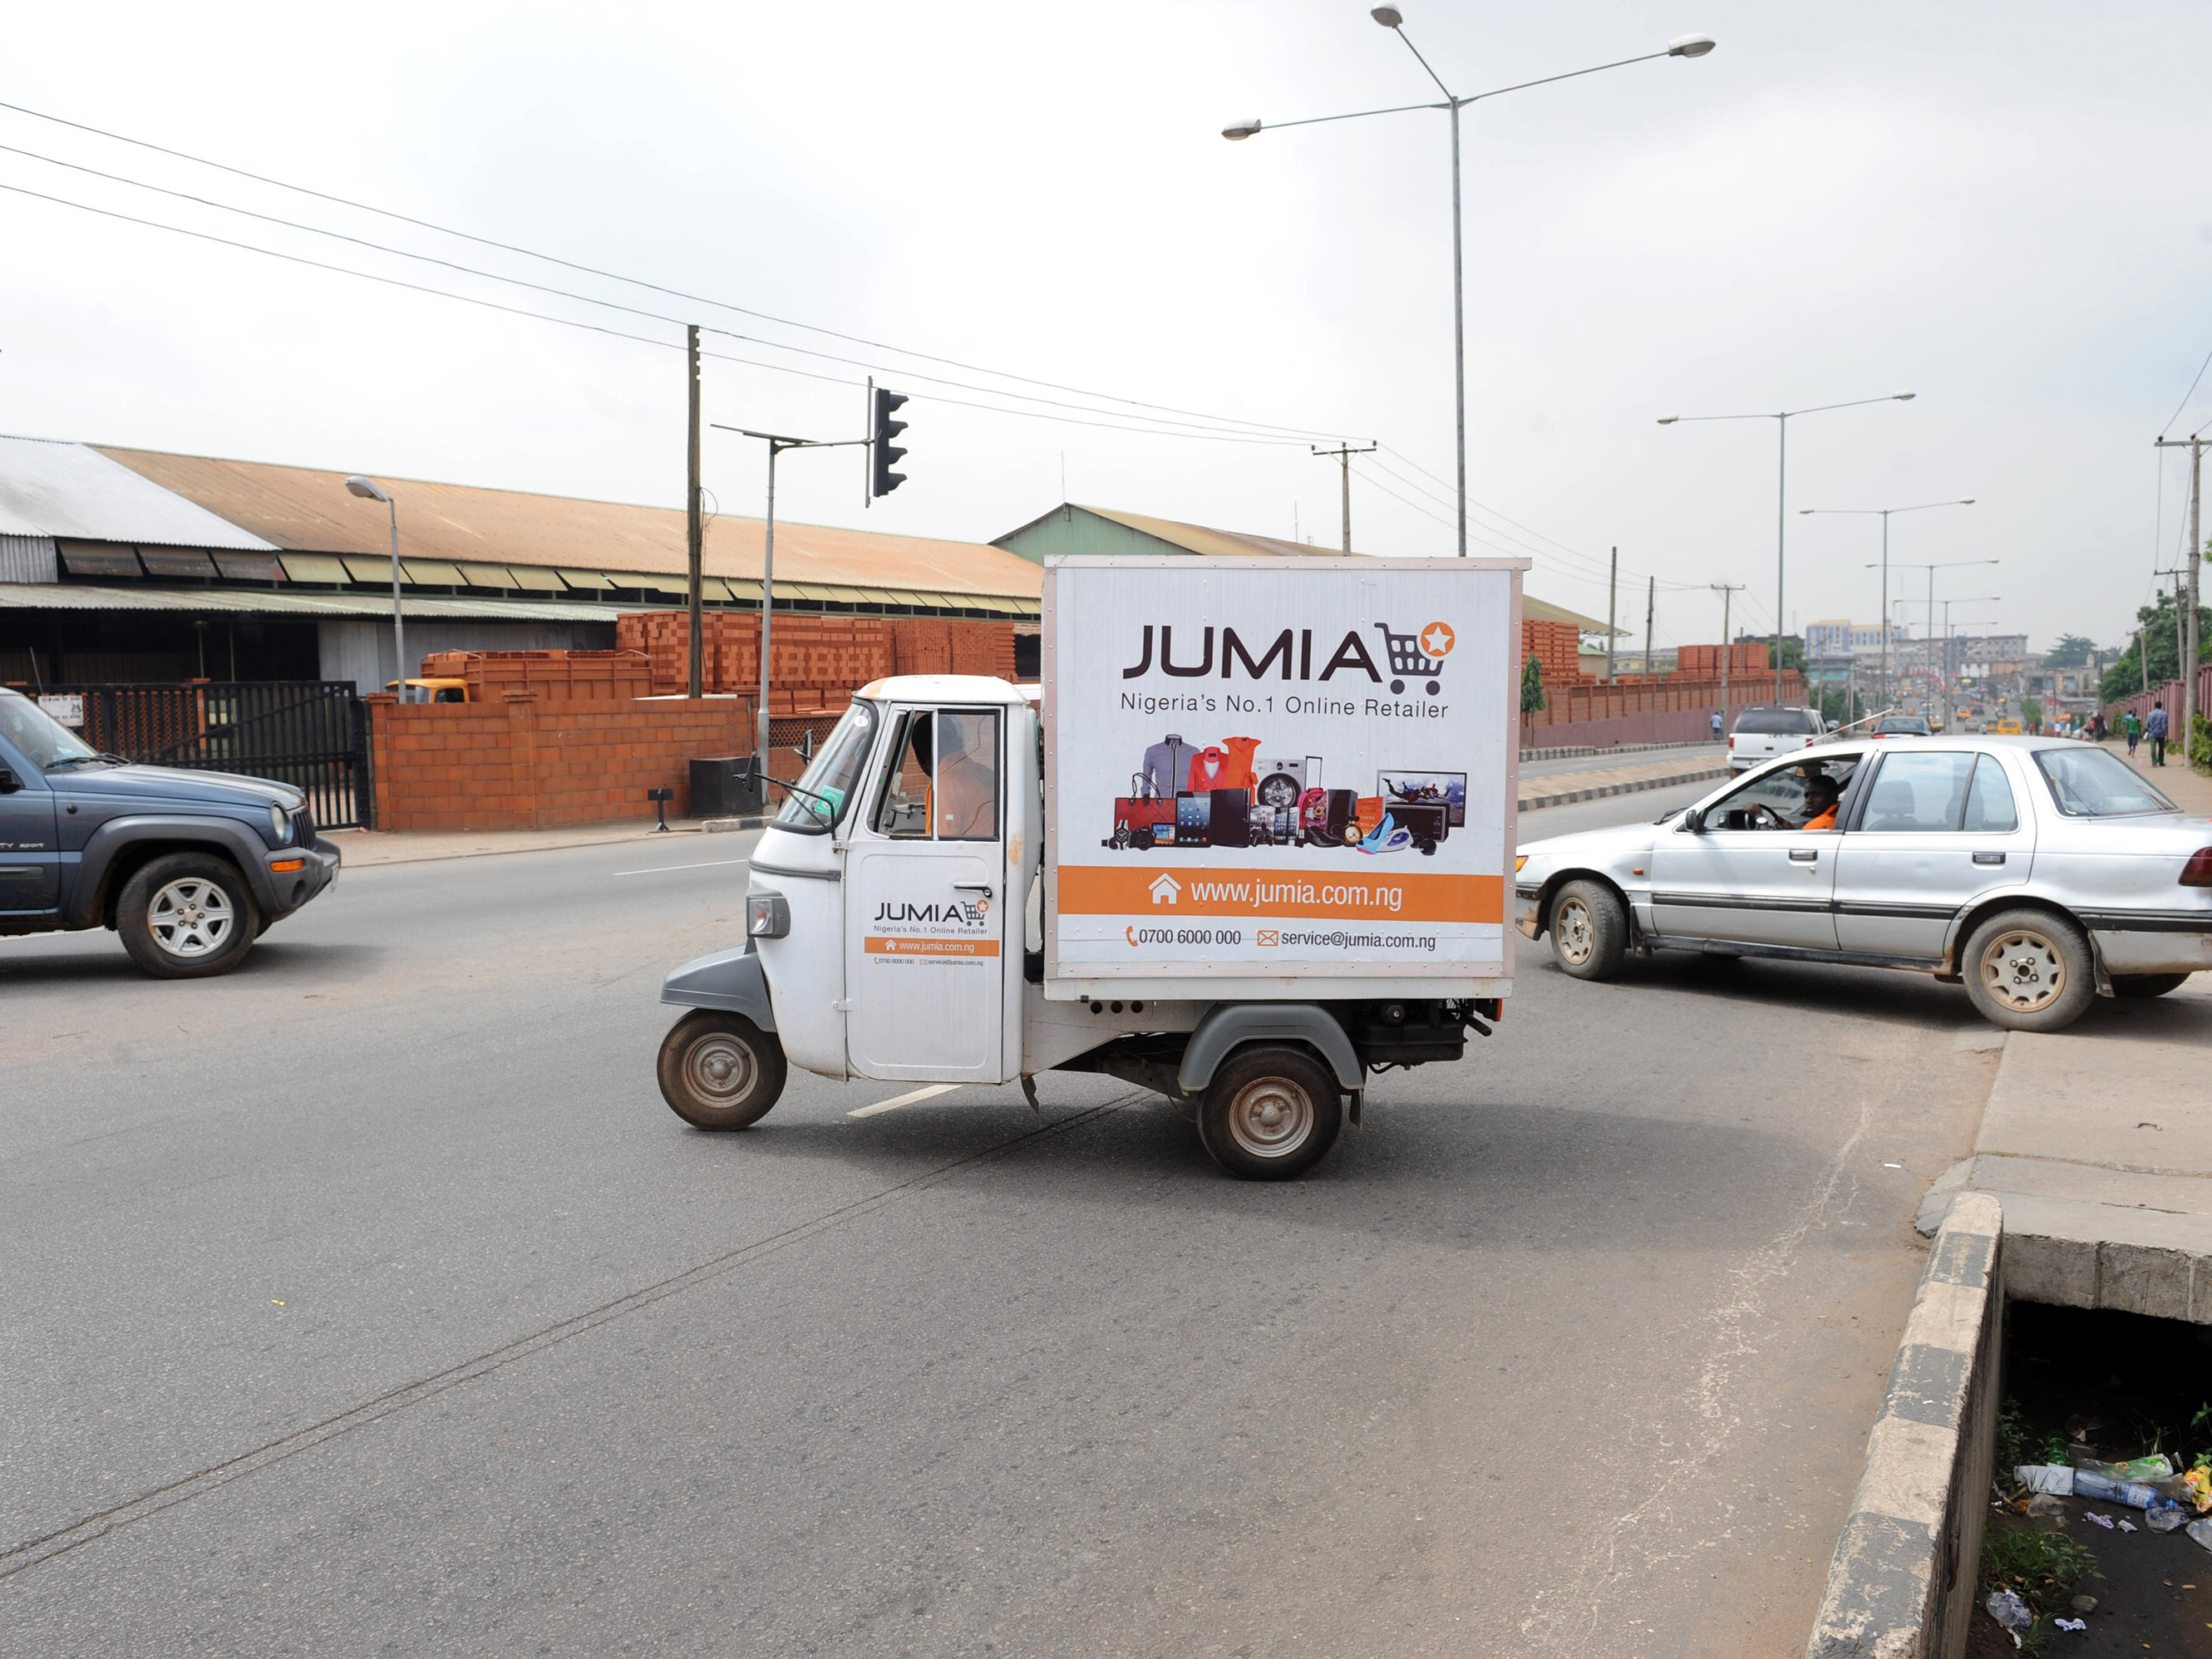 Amazon of Africa Van Drivers Battle Hardships on Lagos Streets